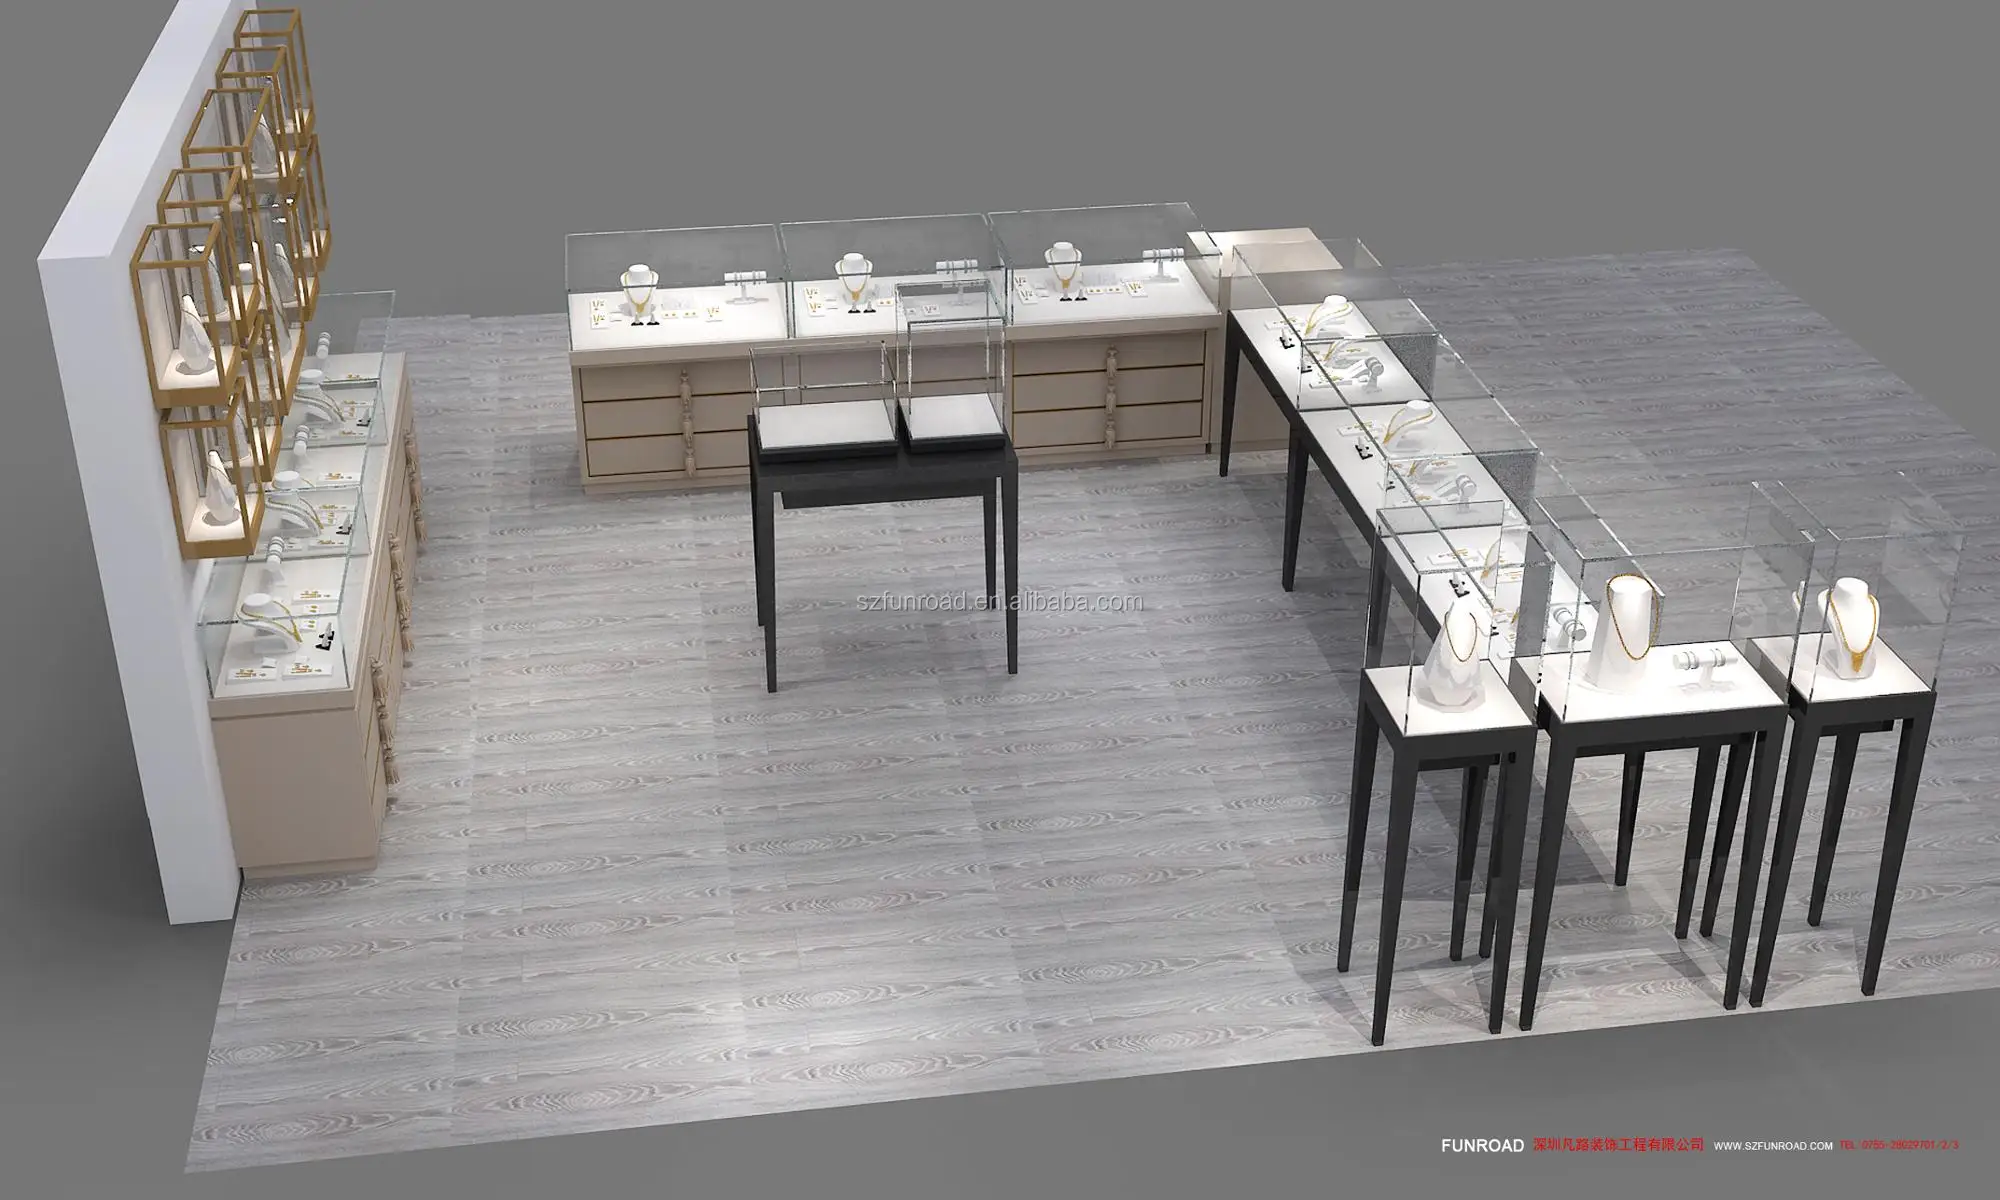 Fashion manufacture of showcase for jewelry shop decoration furniture interior design